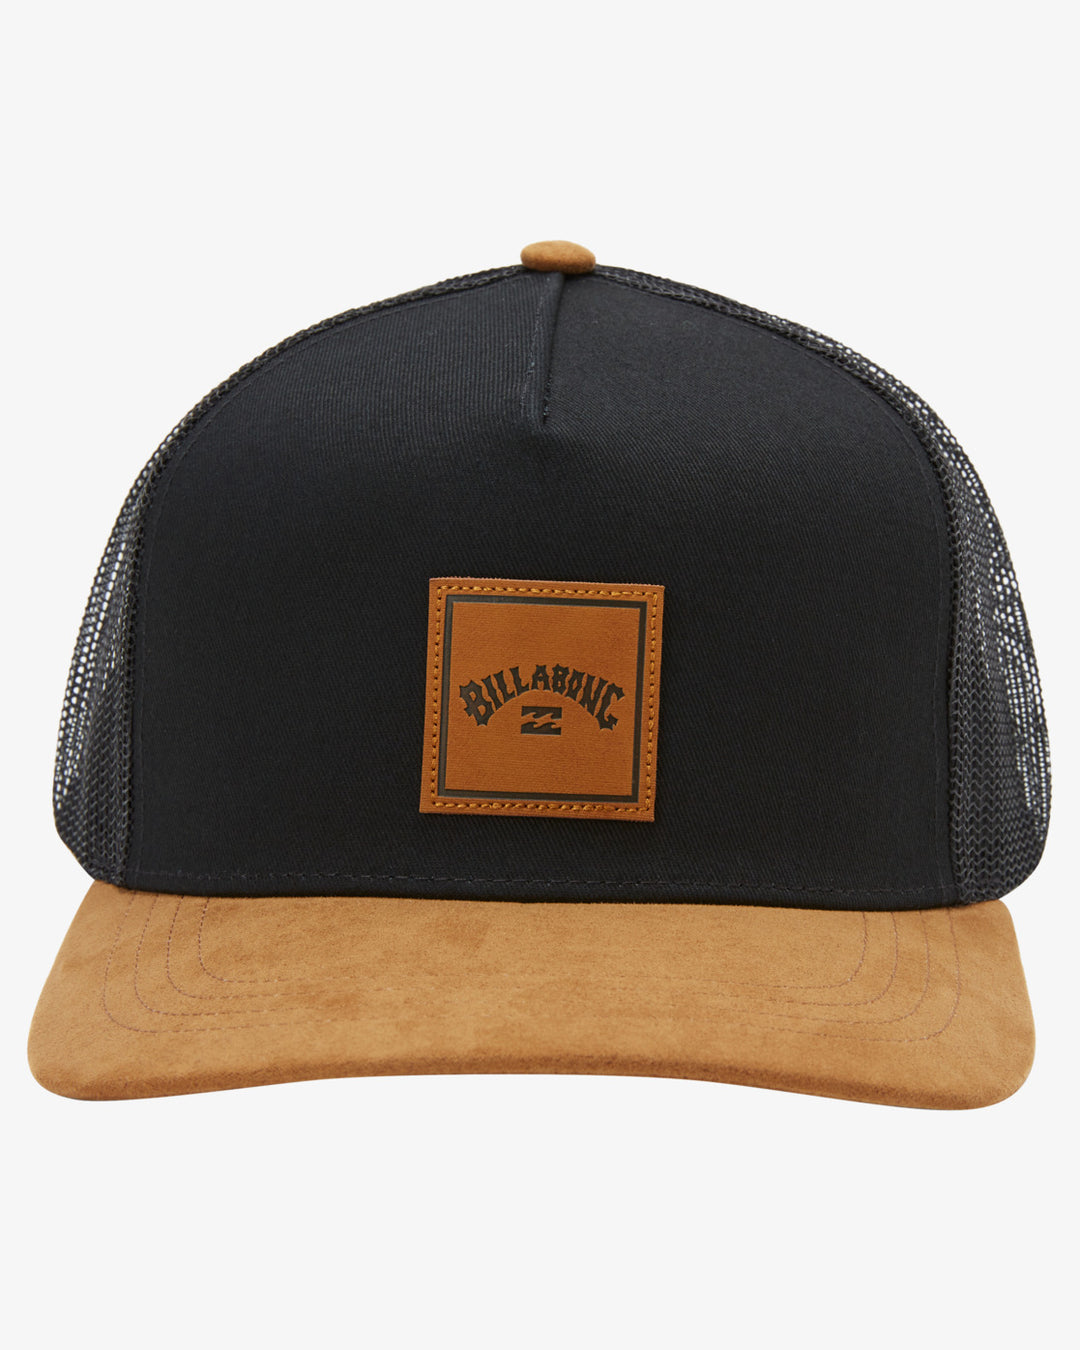 Billabong Boardshop – Trucker Sun - Black/Tan Hat Diego Stacked